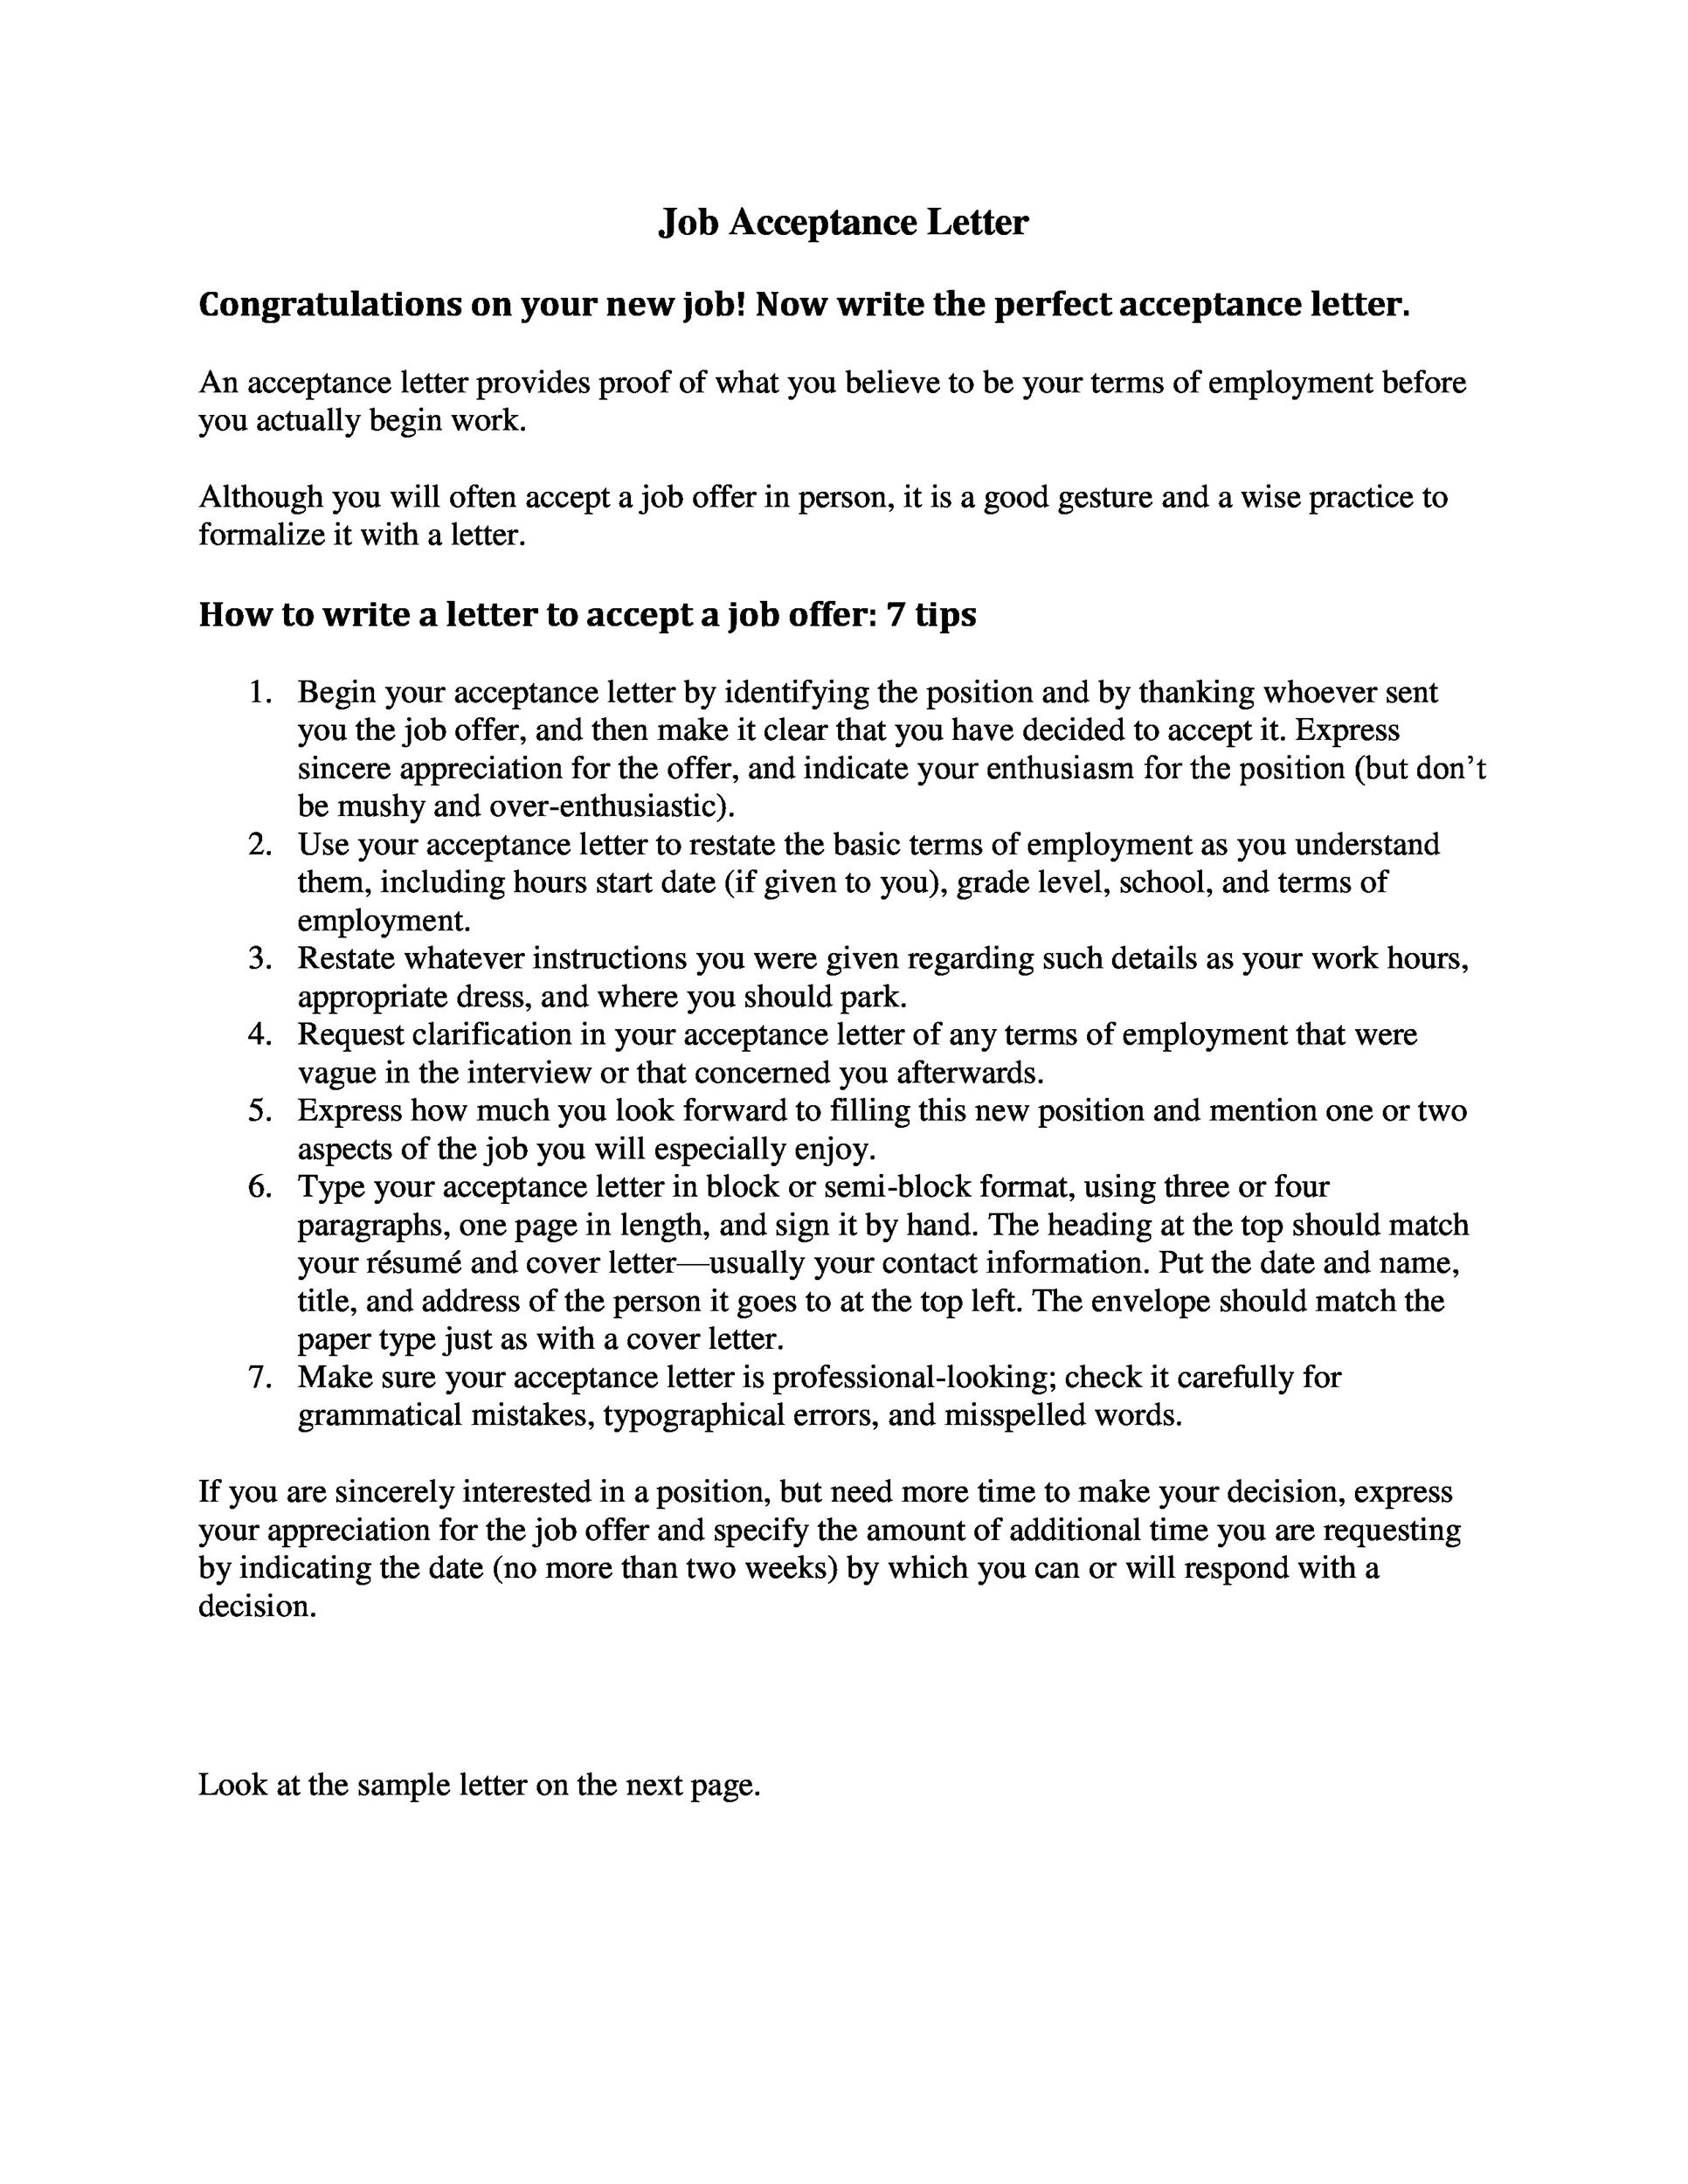 Free job acceptance letter 12